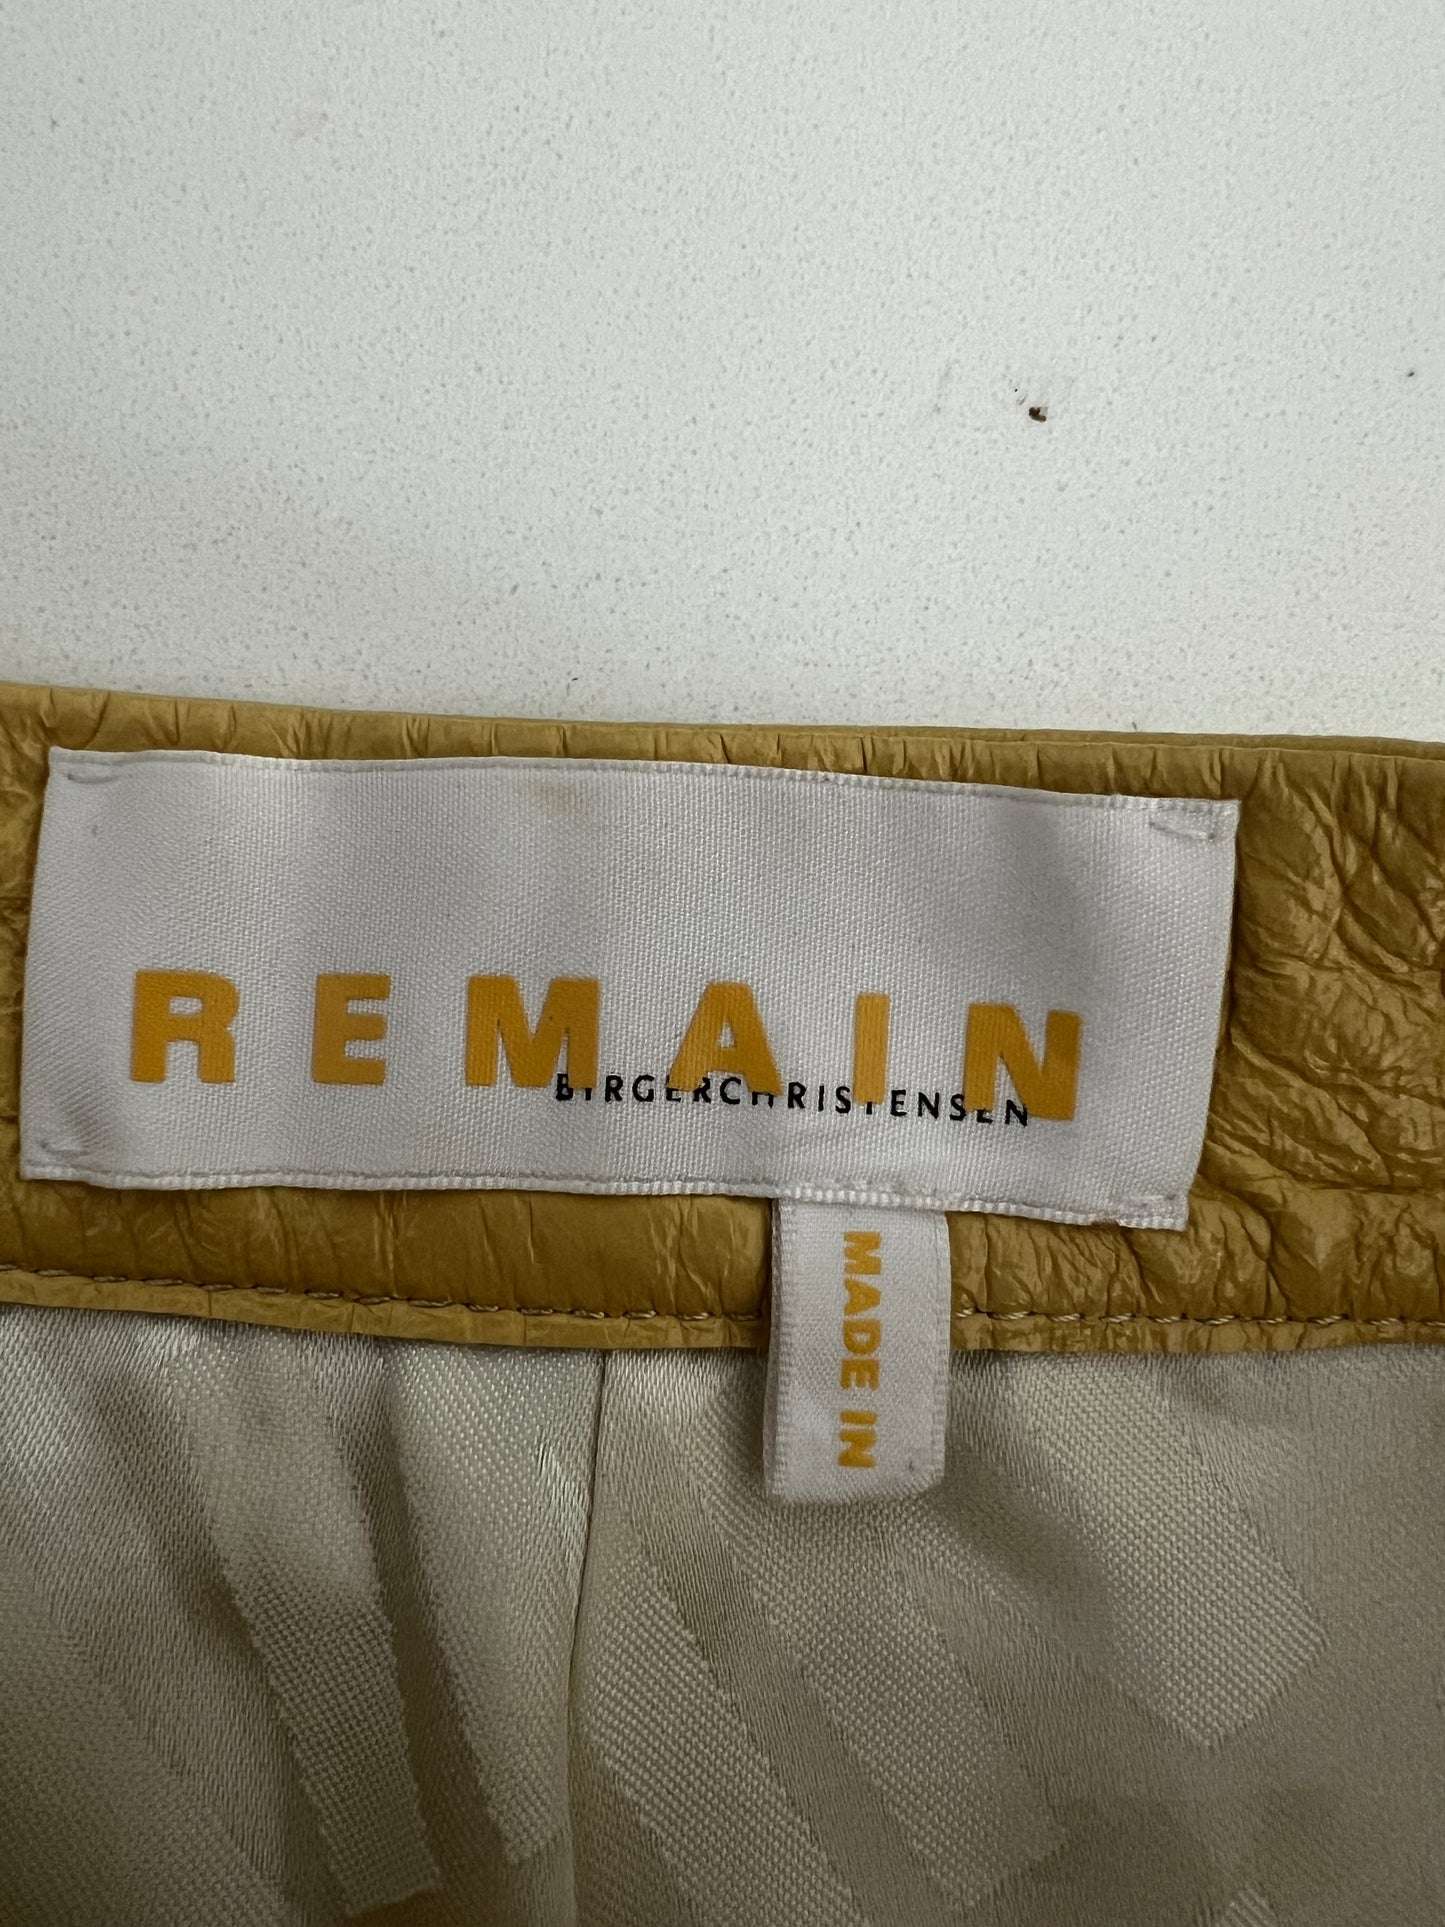 Remain Christensen Birger Maisy Yellow Straw Leather Shorts Size 28/ US6